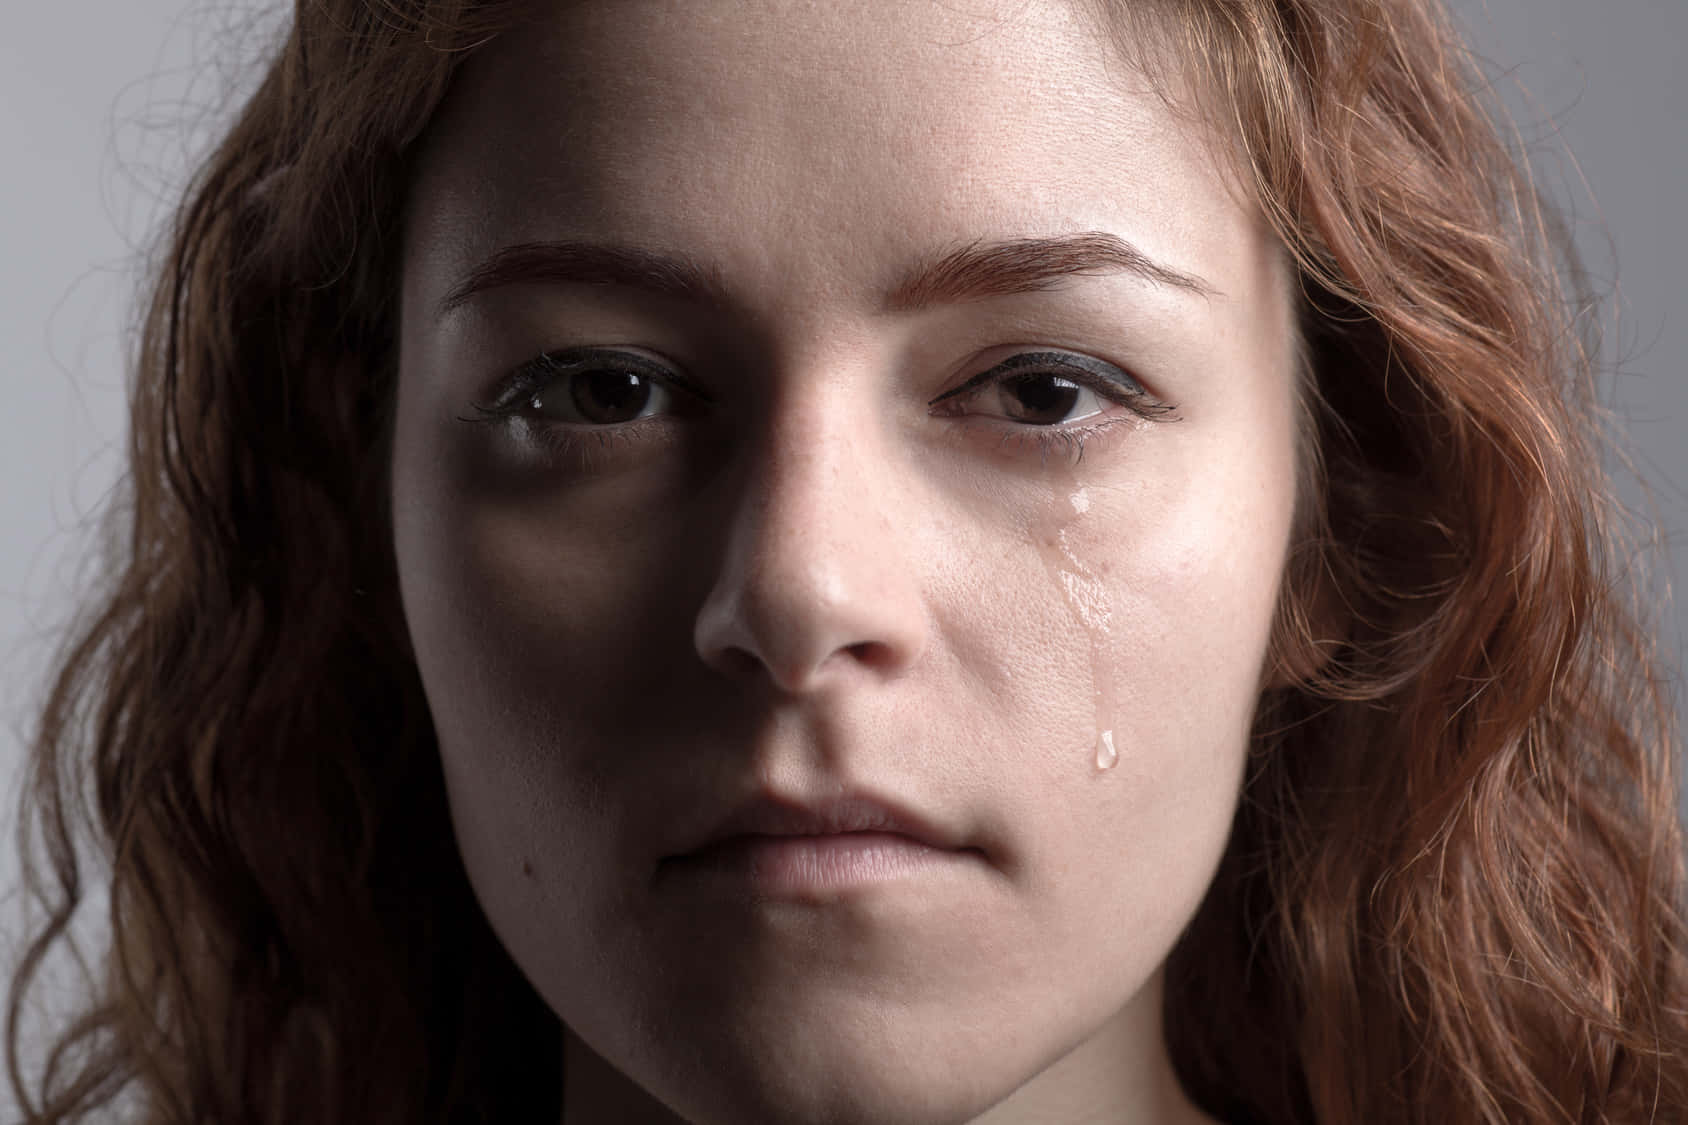 A Lonely Tear - Raw Emotion Displayed Through Tears